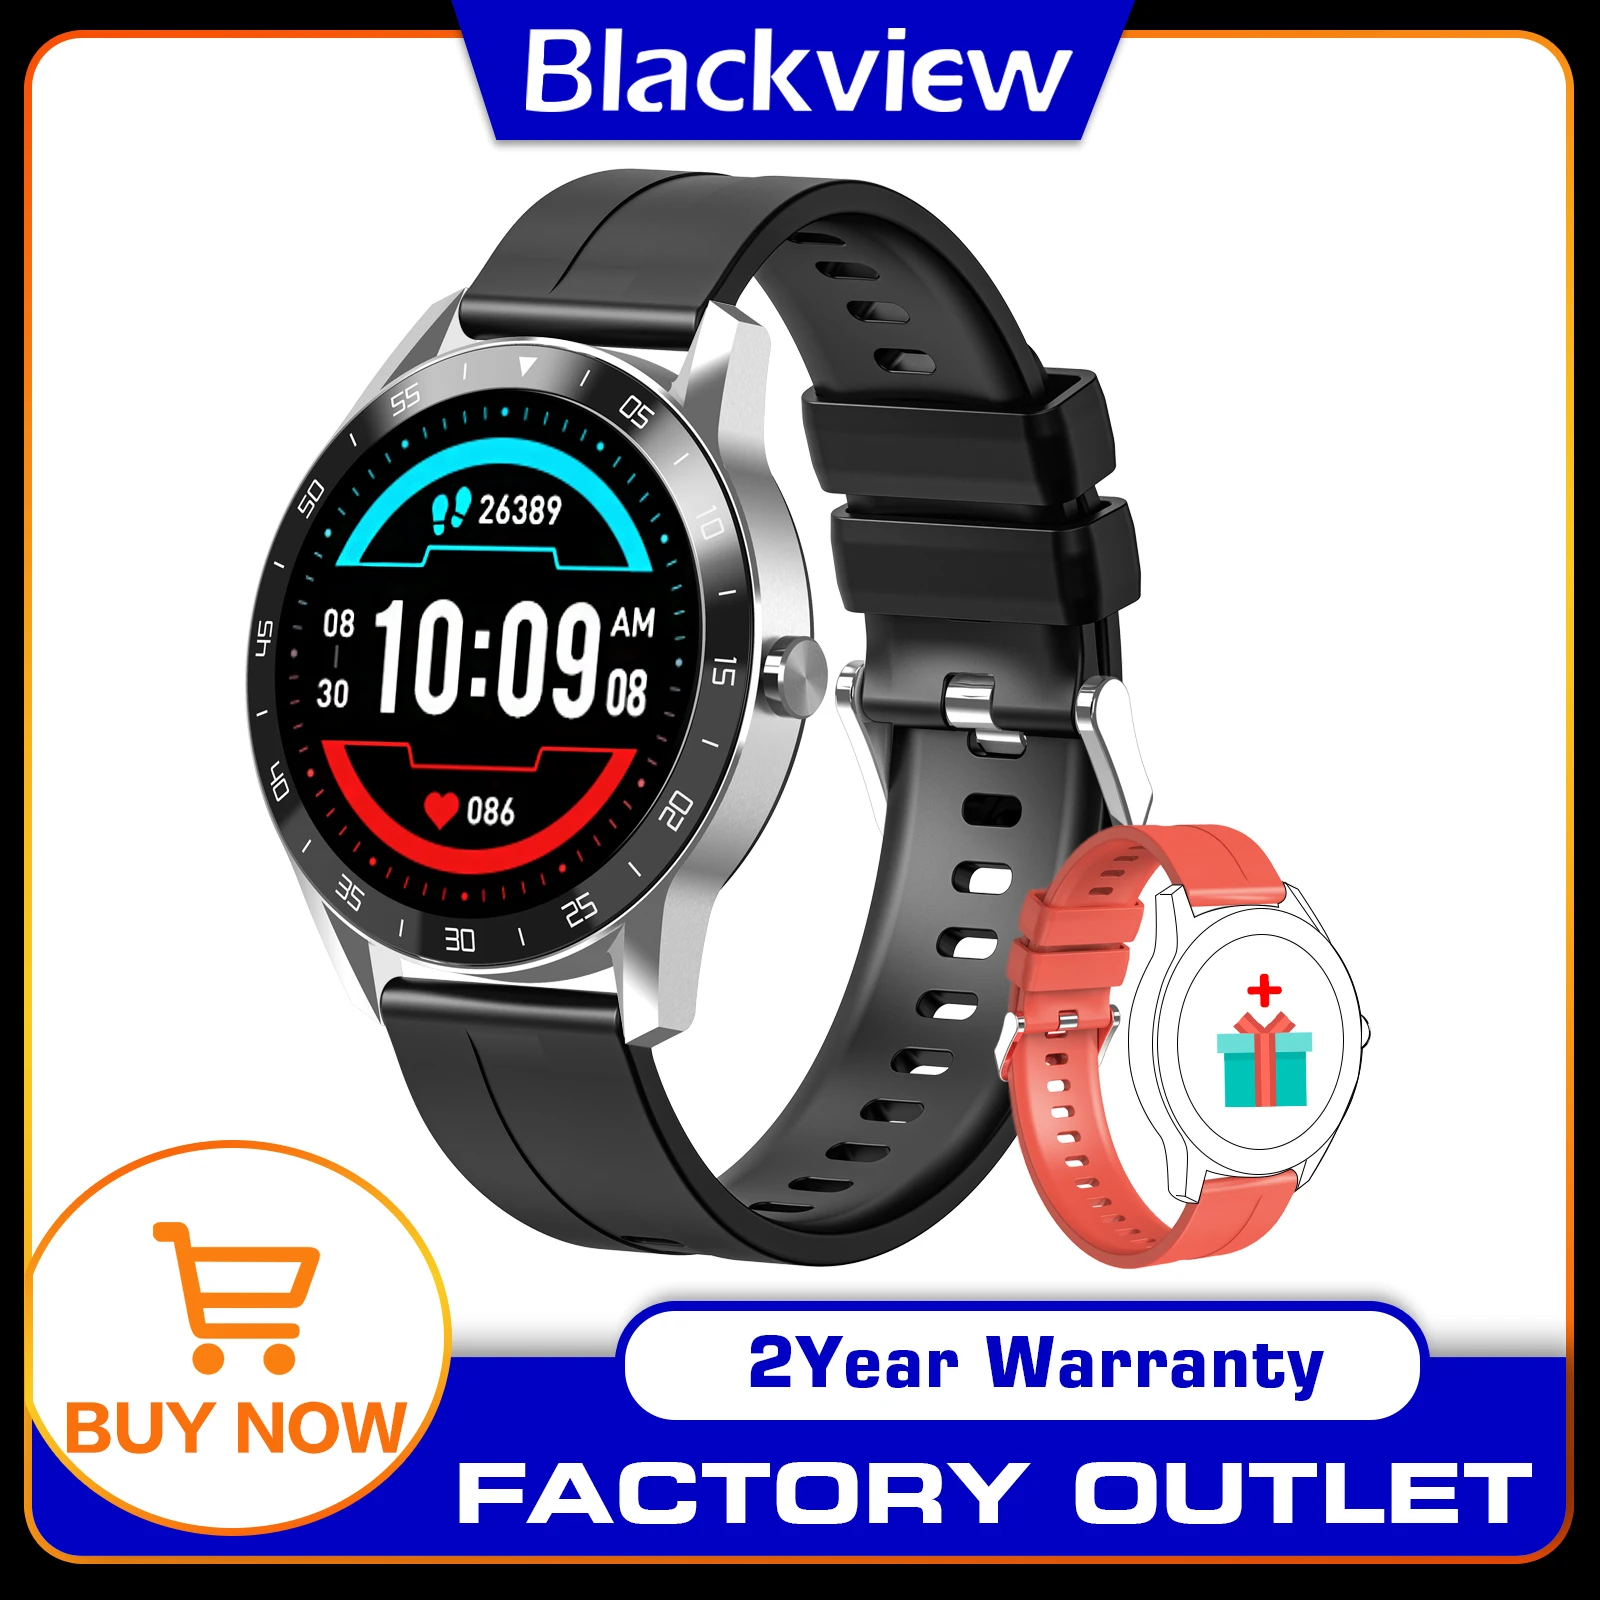 Blackview-reloj inteligente X1, resistente al agua hasta 5atm, con control...